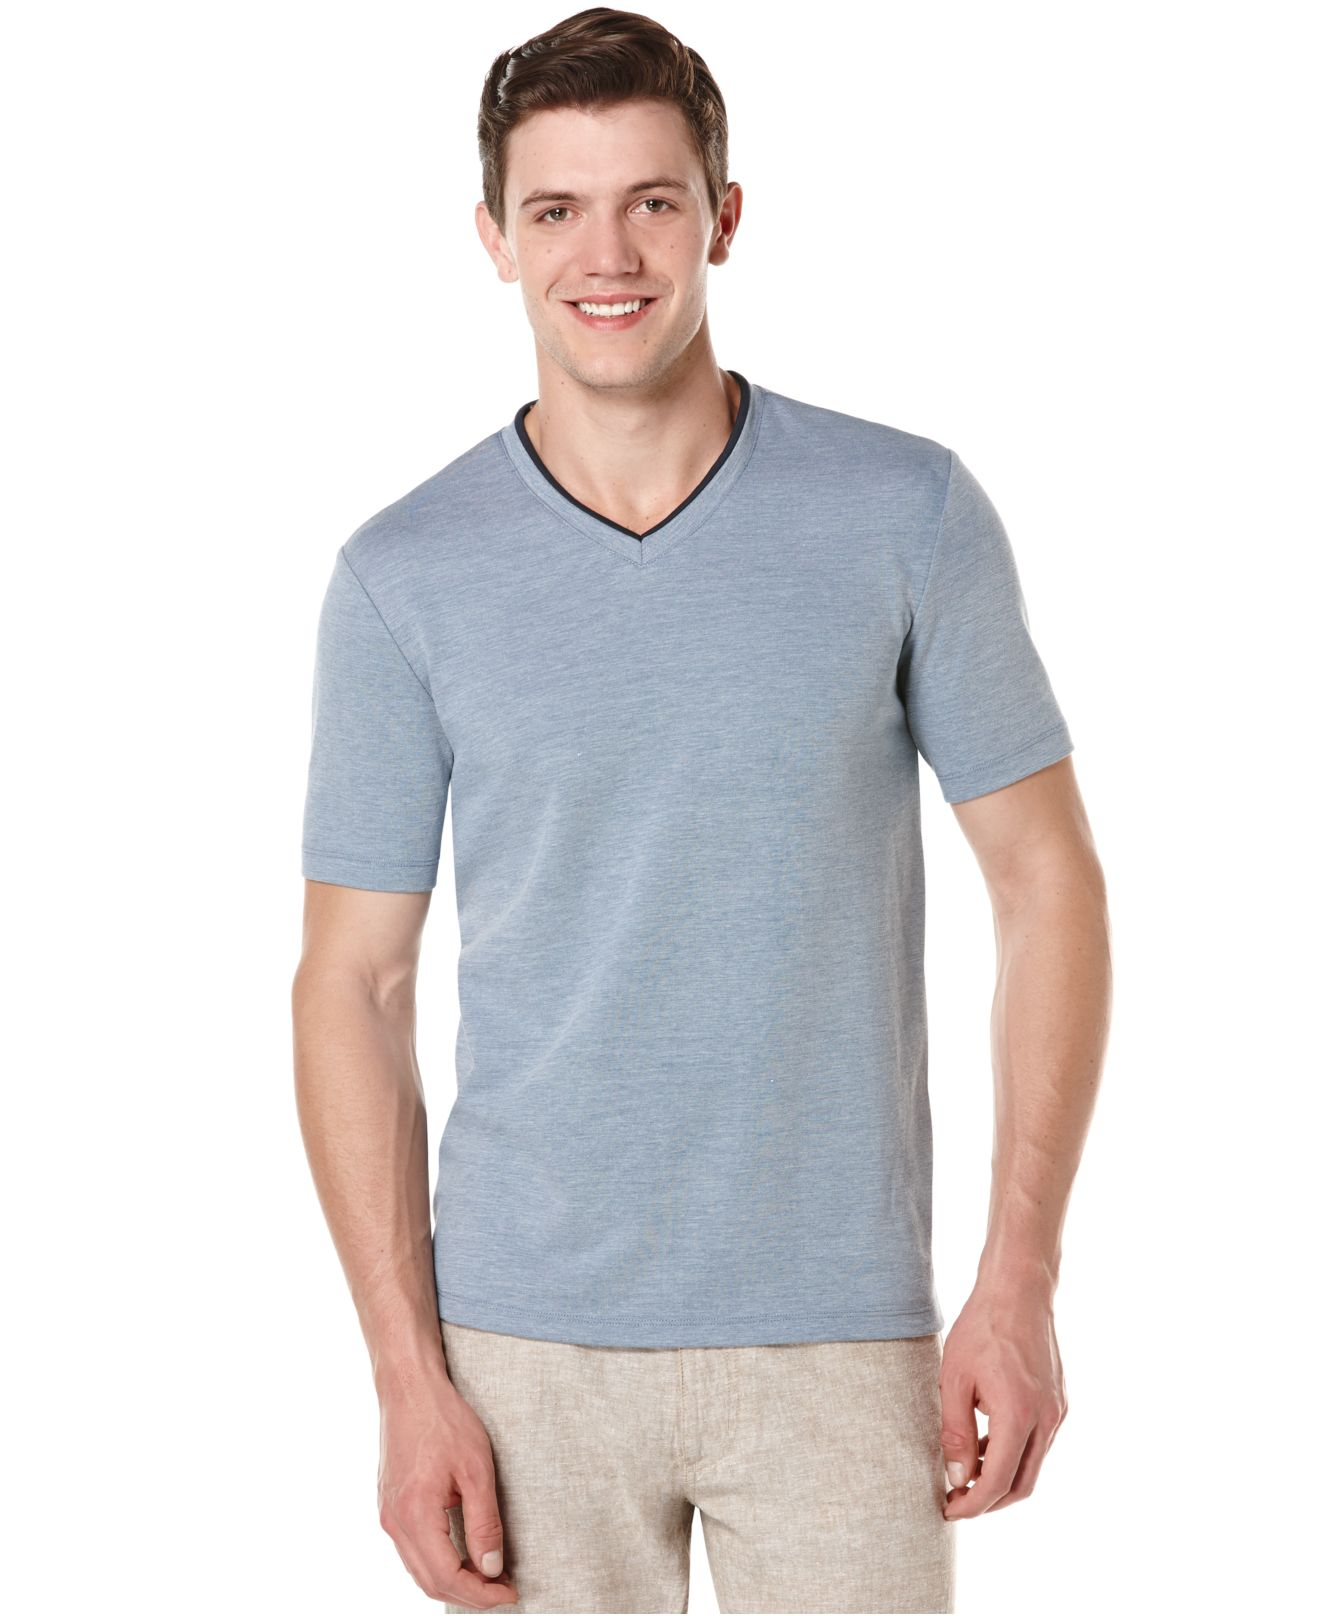 Lyst - Perry Ellis Oxford V-neck T-shirt in Blue for Men